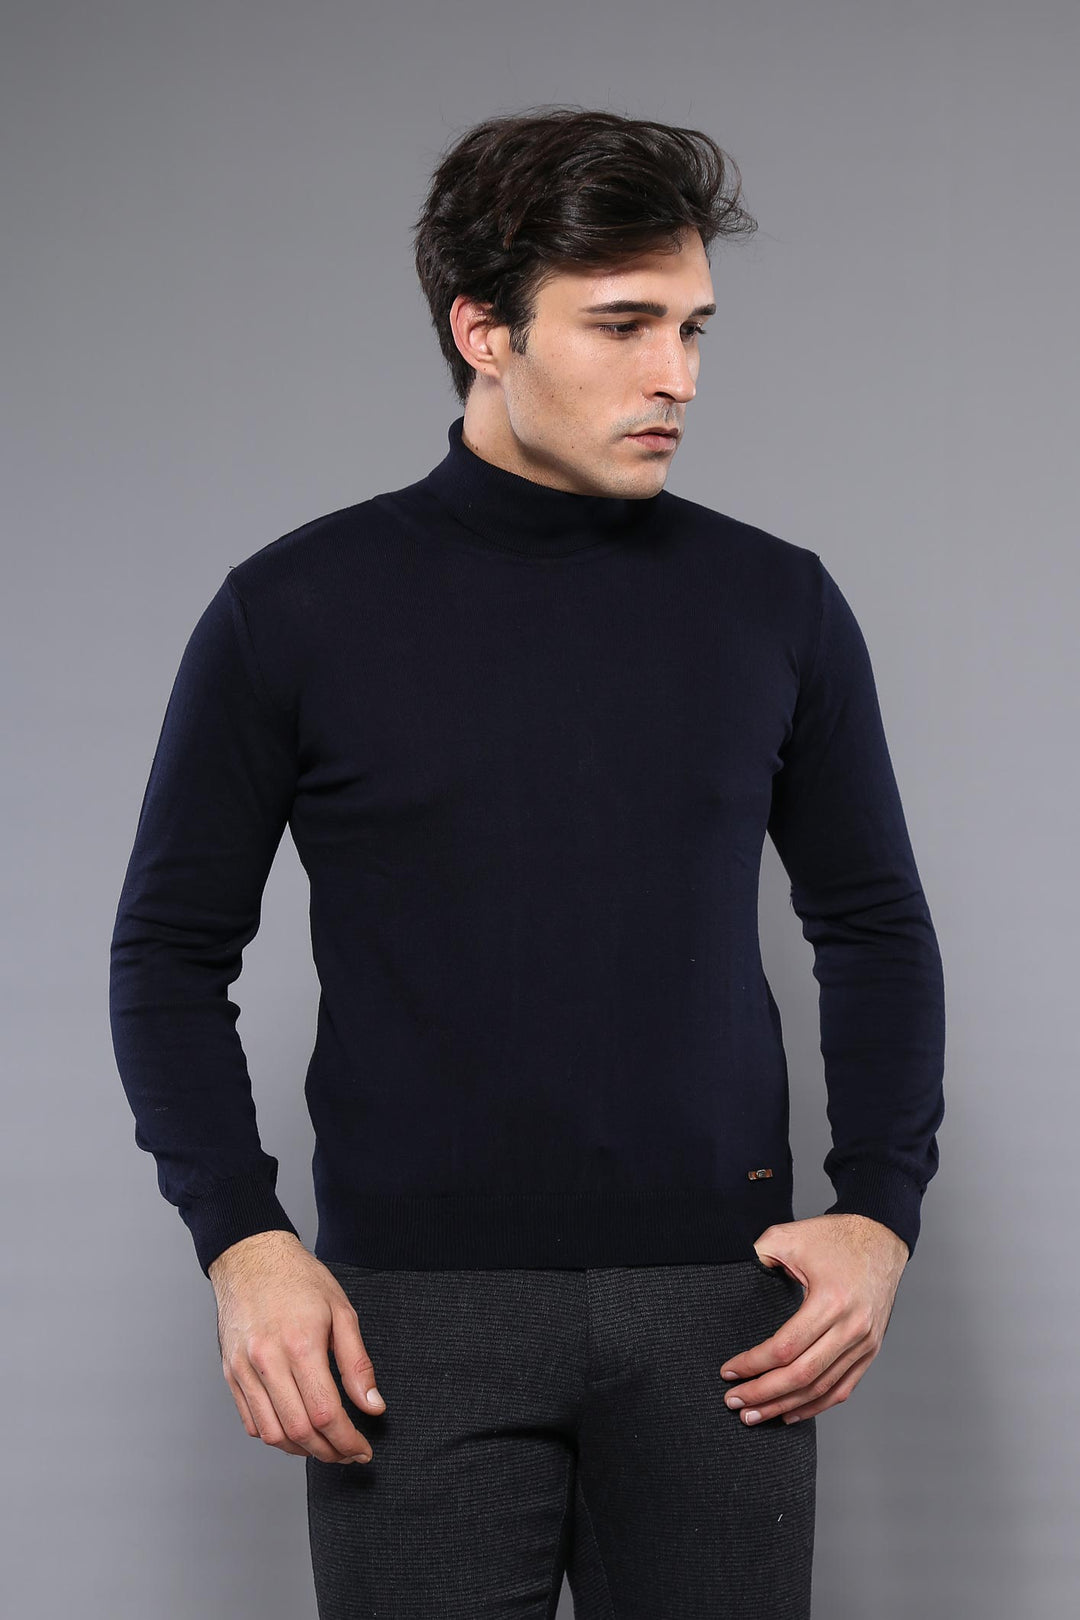 Turtleneck Navy Blue Men Sweater | Wessi